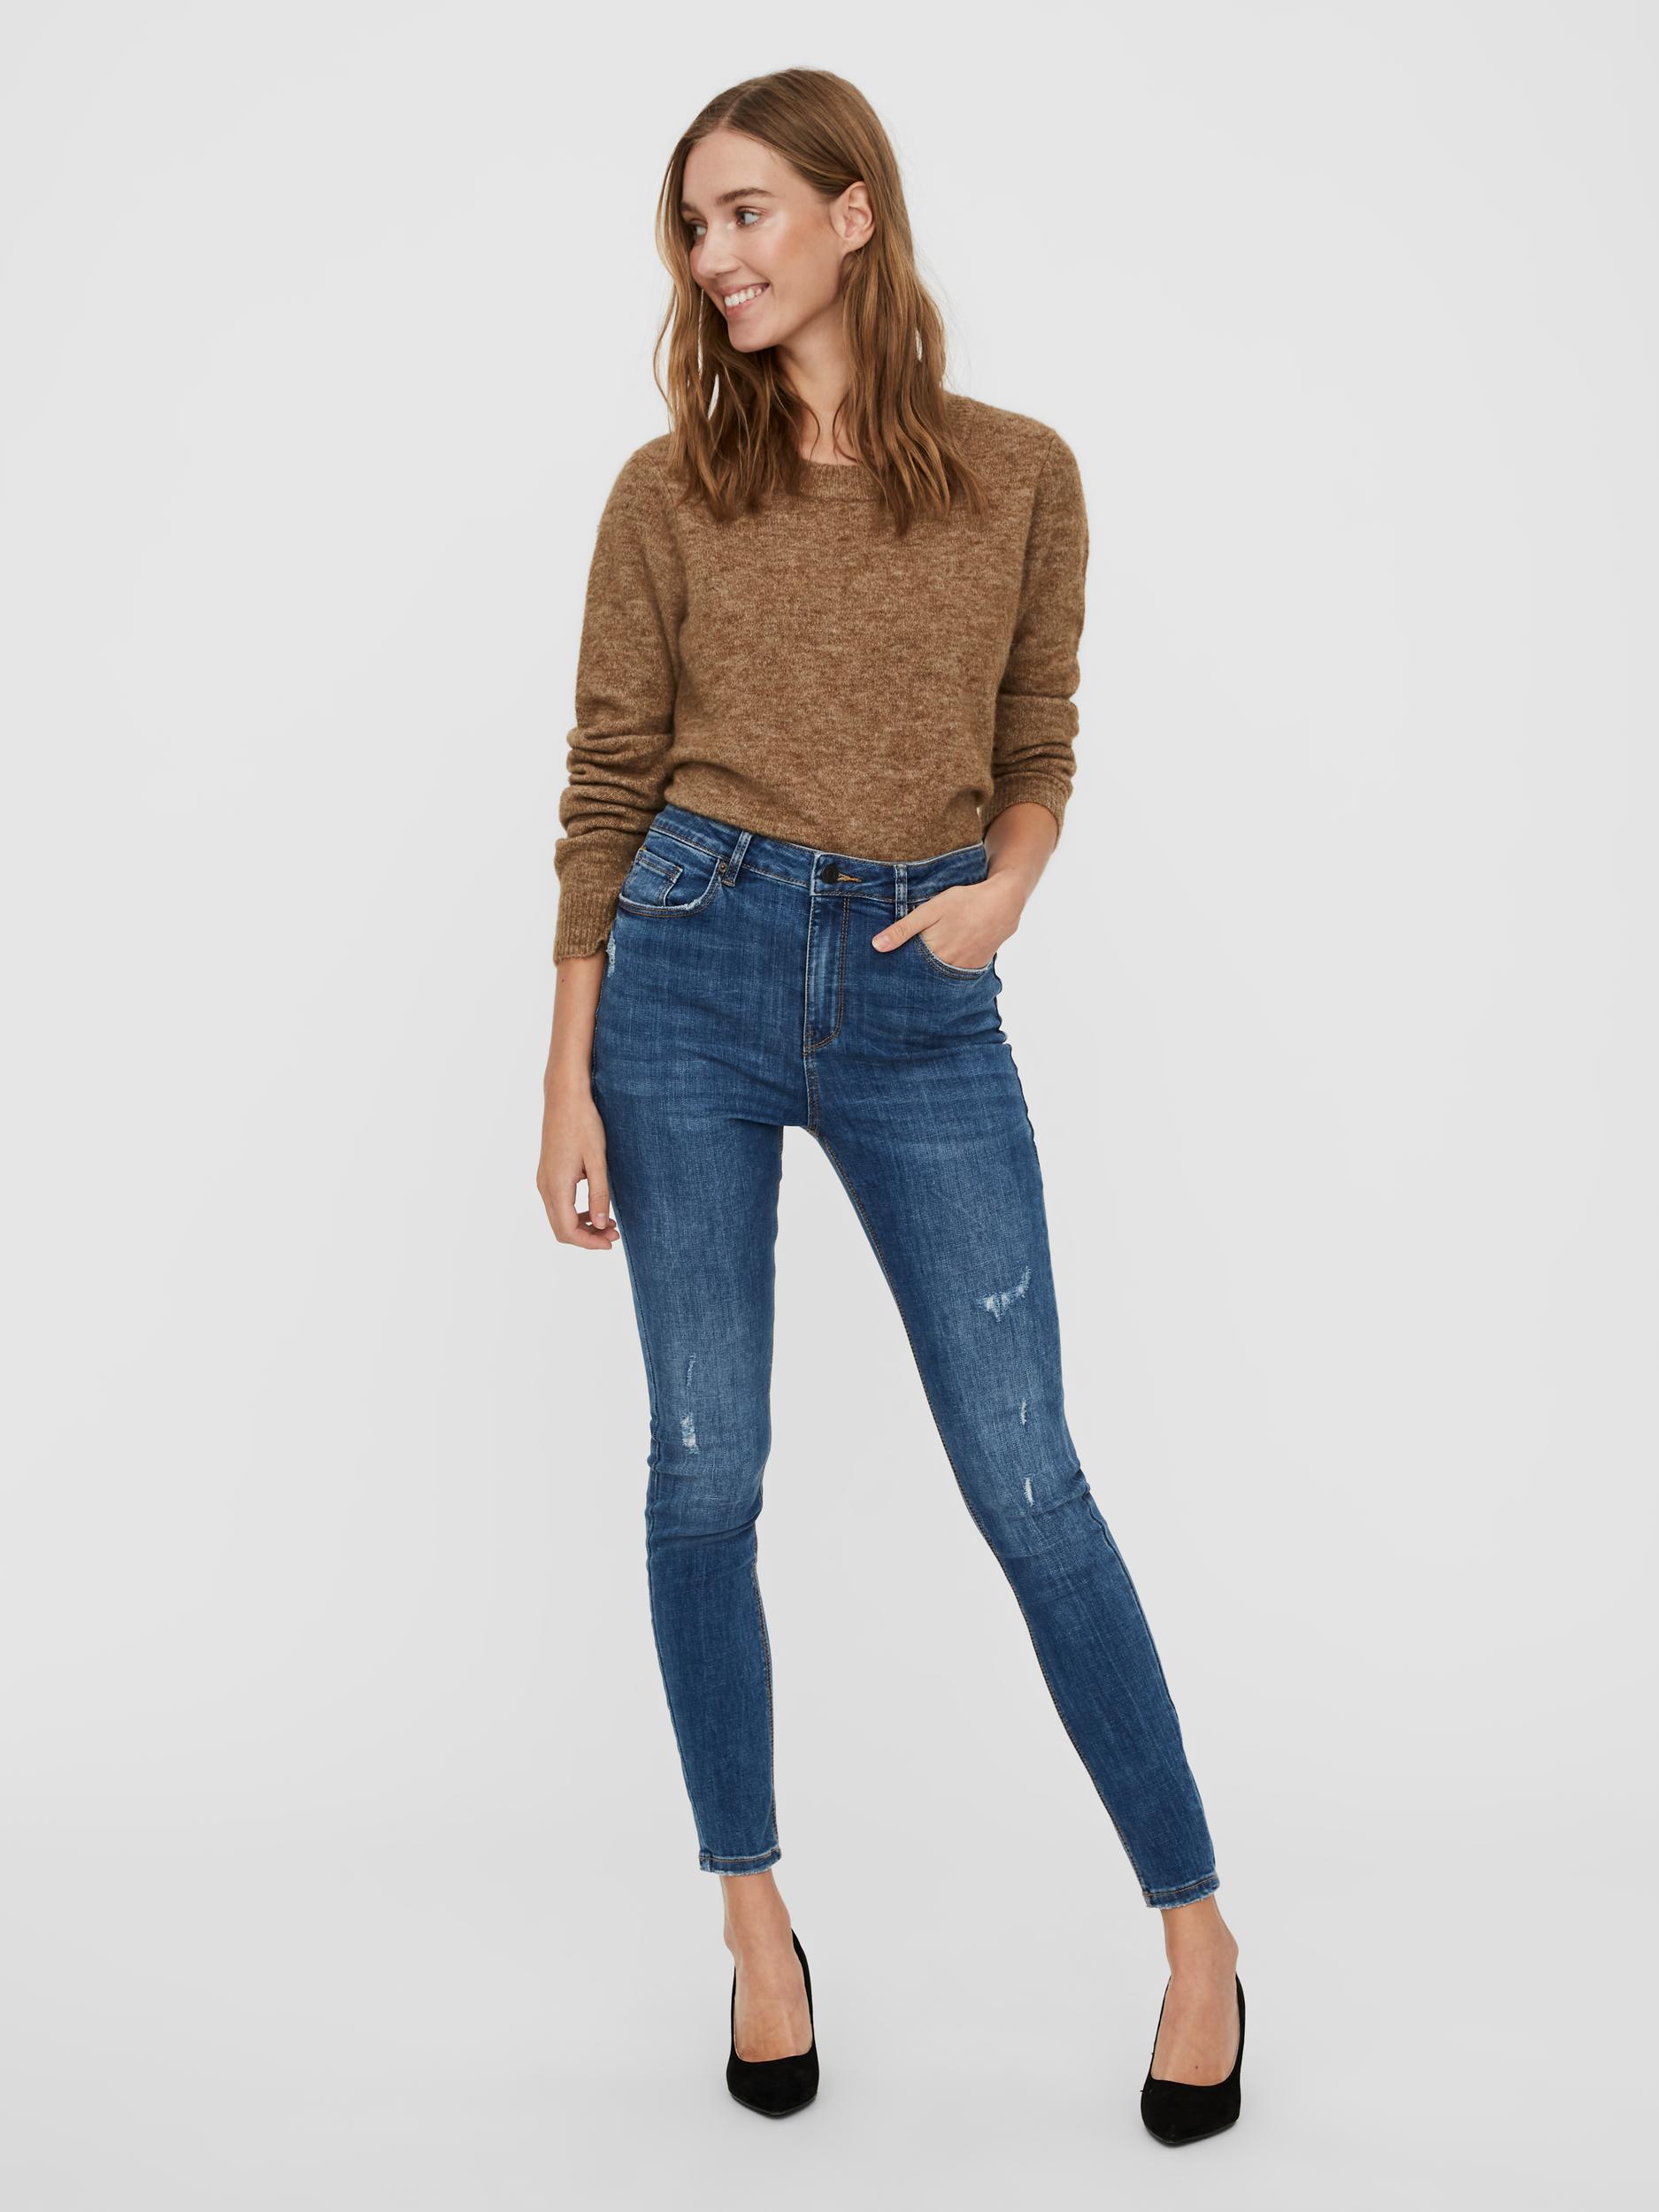 Sophia high waist skinny fit jeans, MEDIUM BLUE DENIM, large